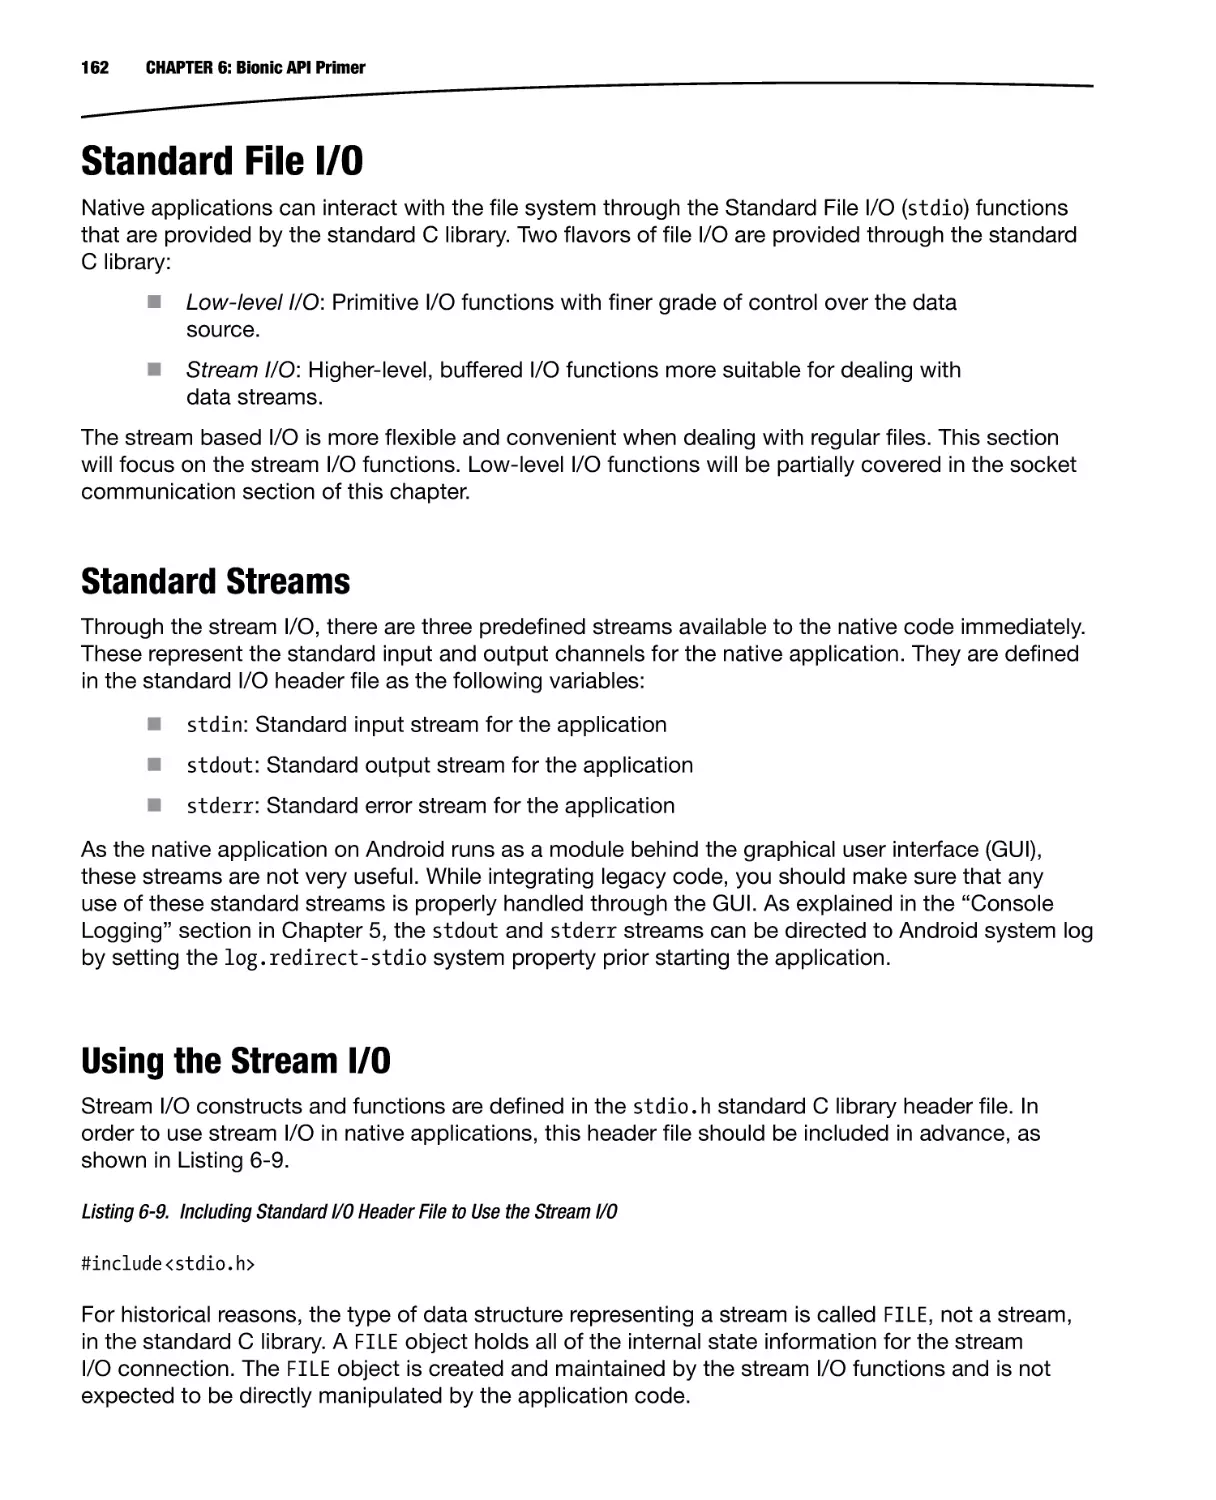 Standard File I/O
Standard Streams
Using the Stream I/O